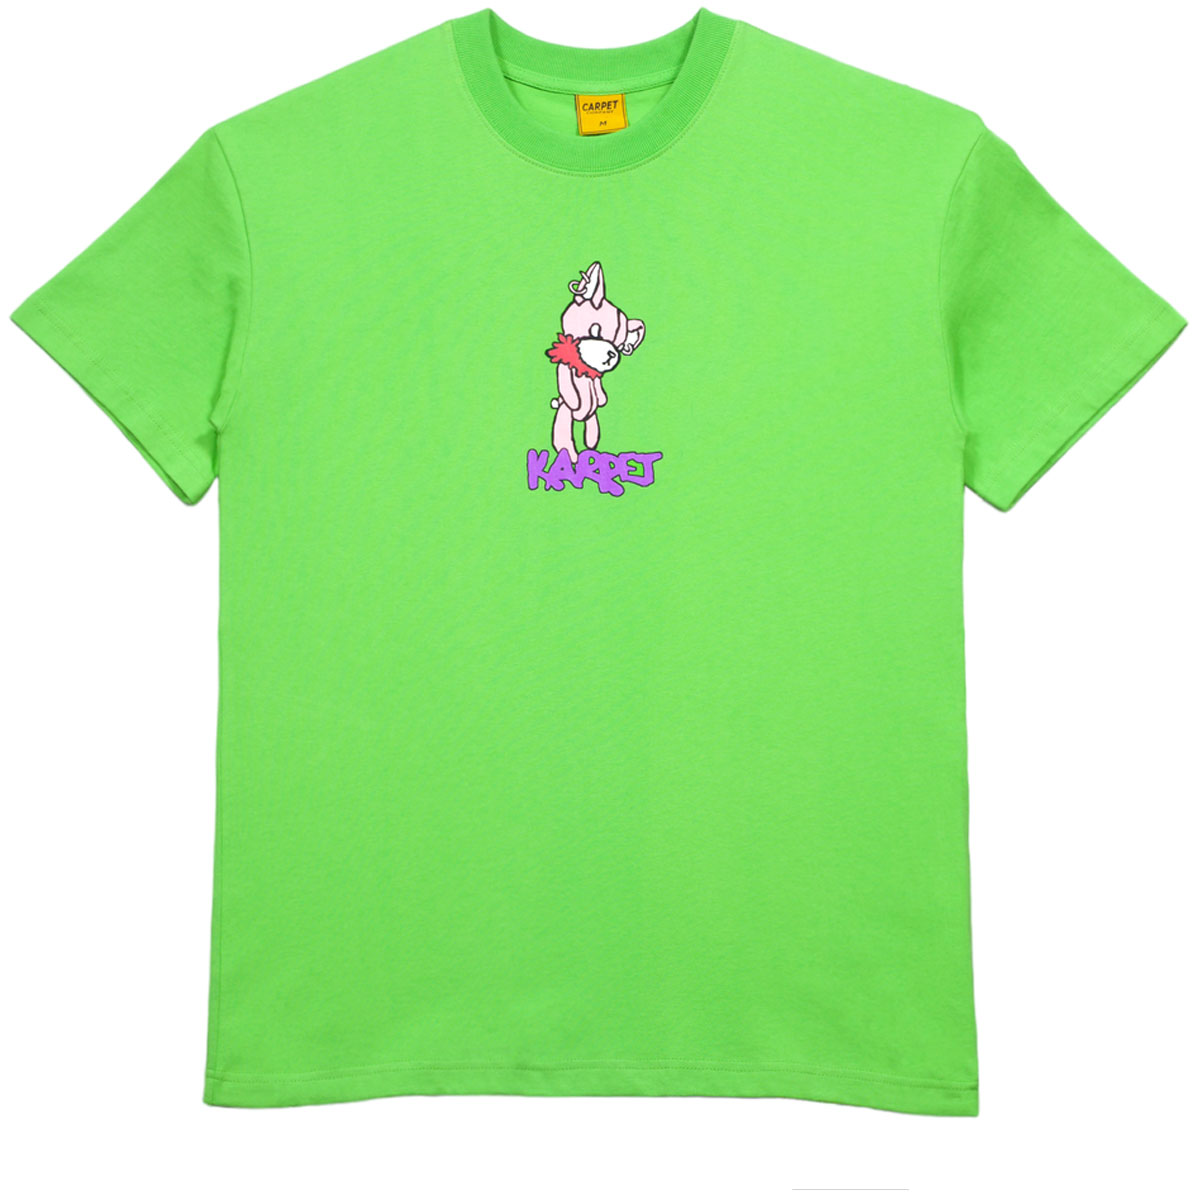 Carpet Company Teddy Bear T-Shirt - Slime Green image 1